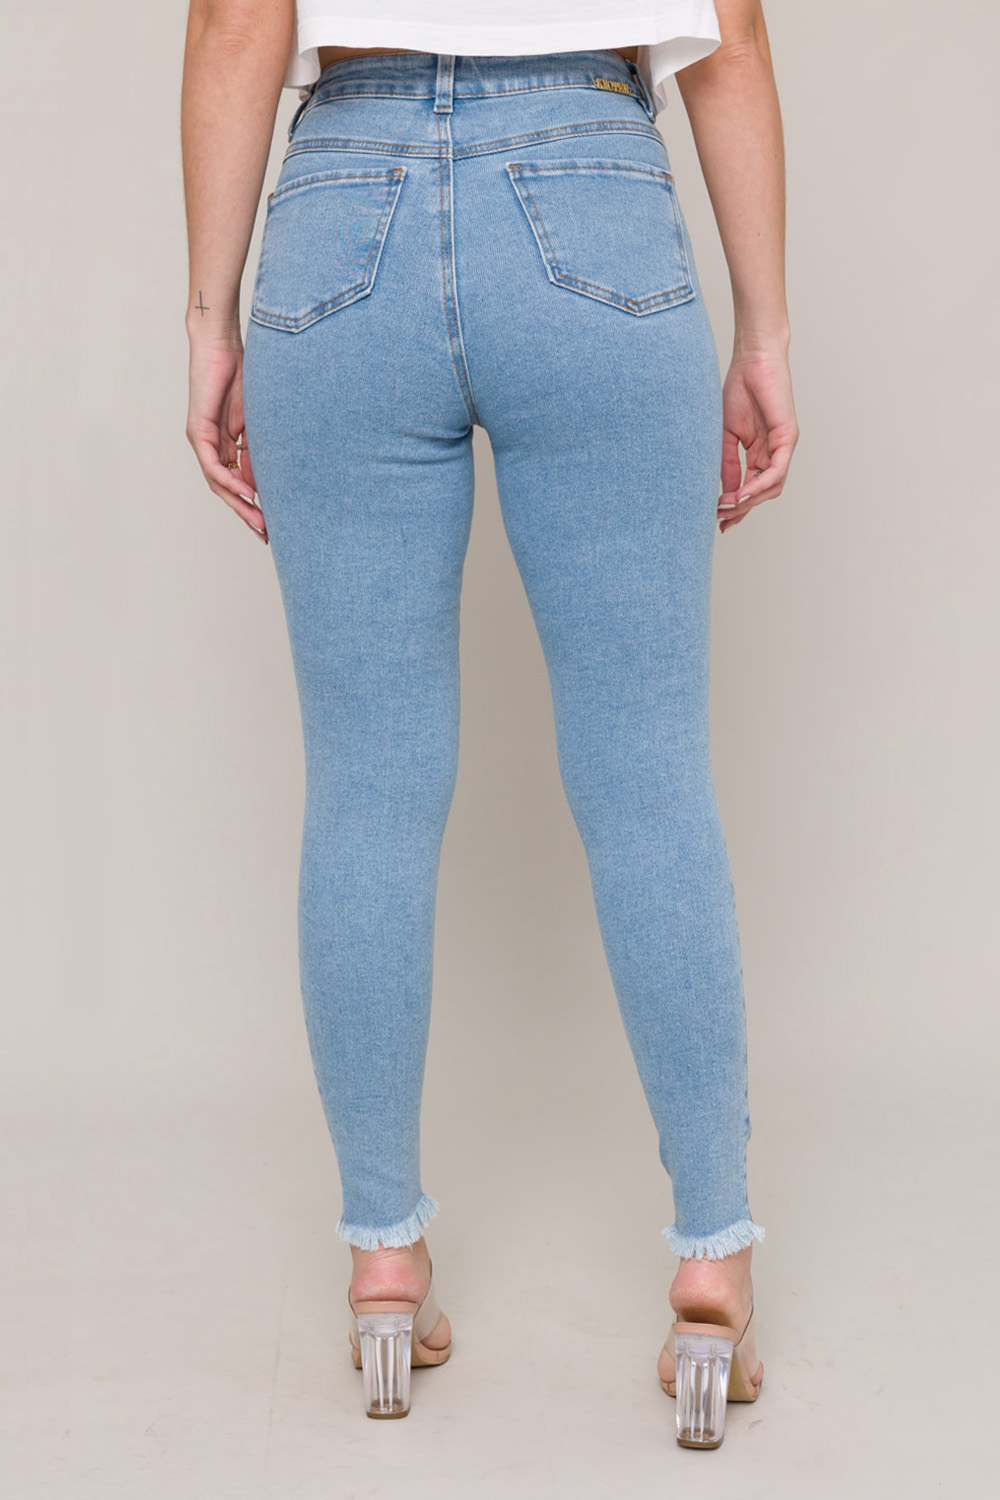 Calça Jeans Cropped Layane - Jeans Claro